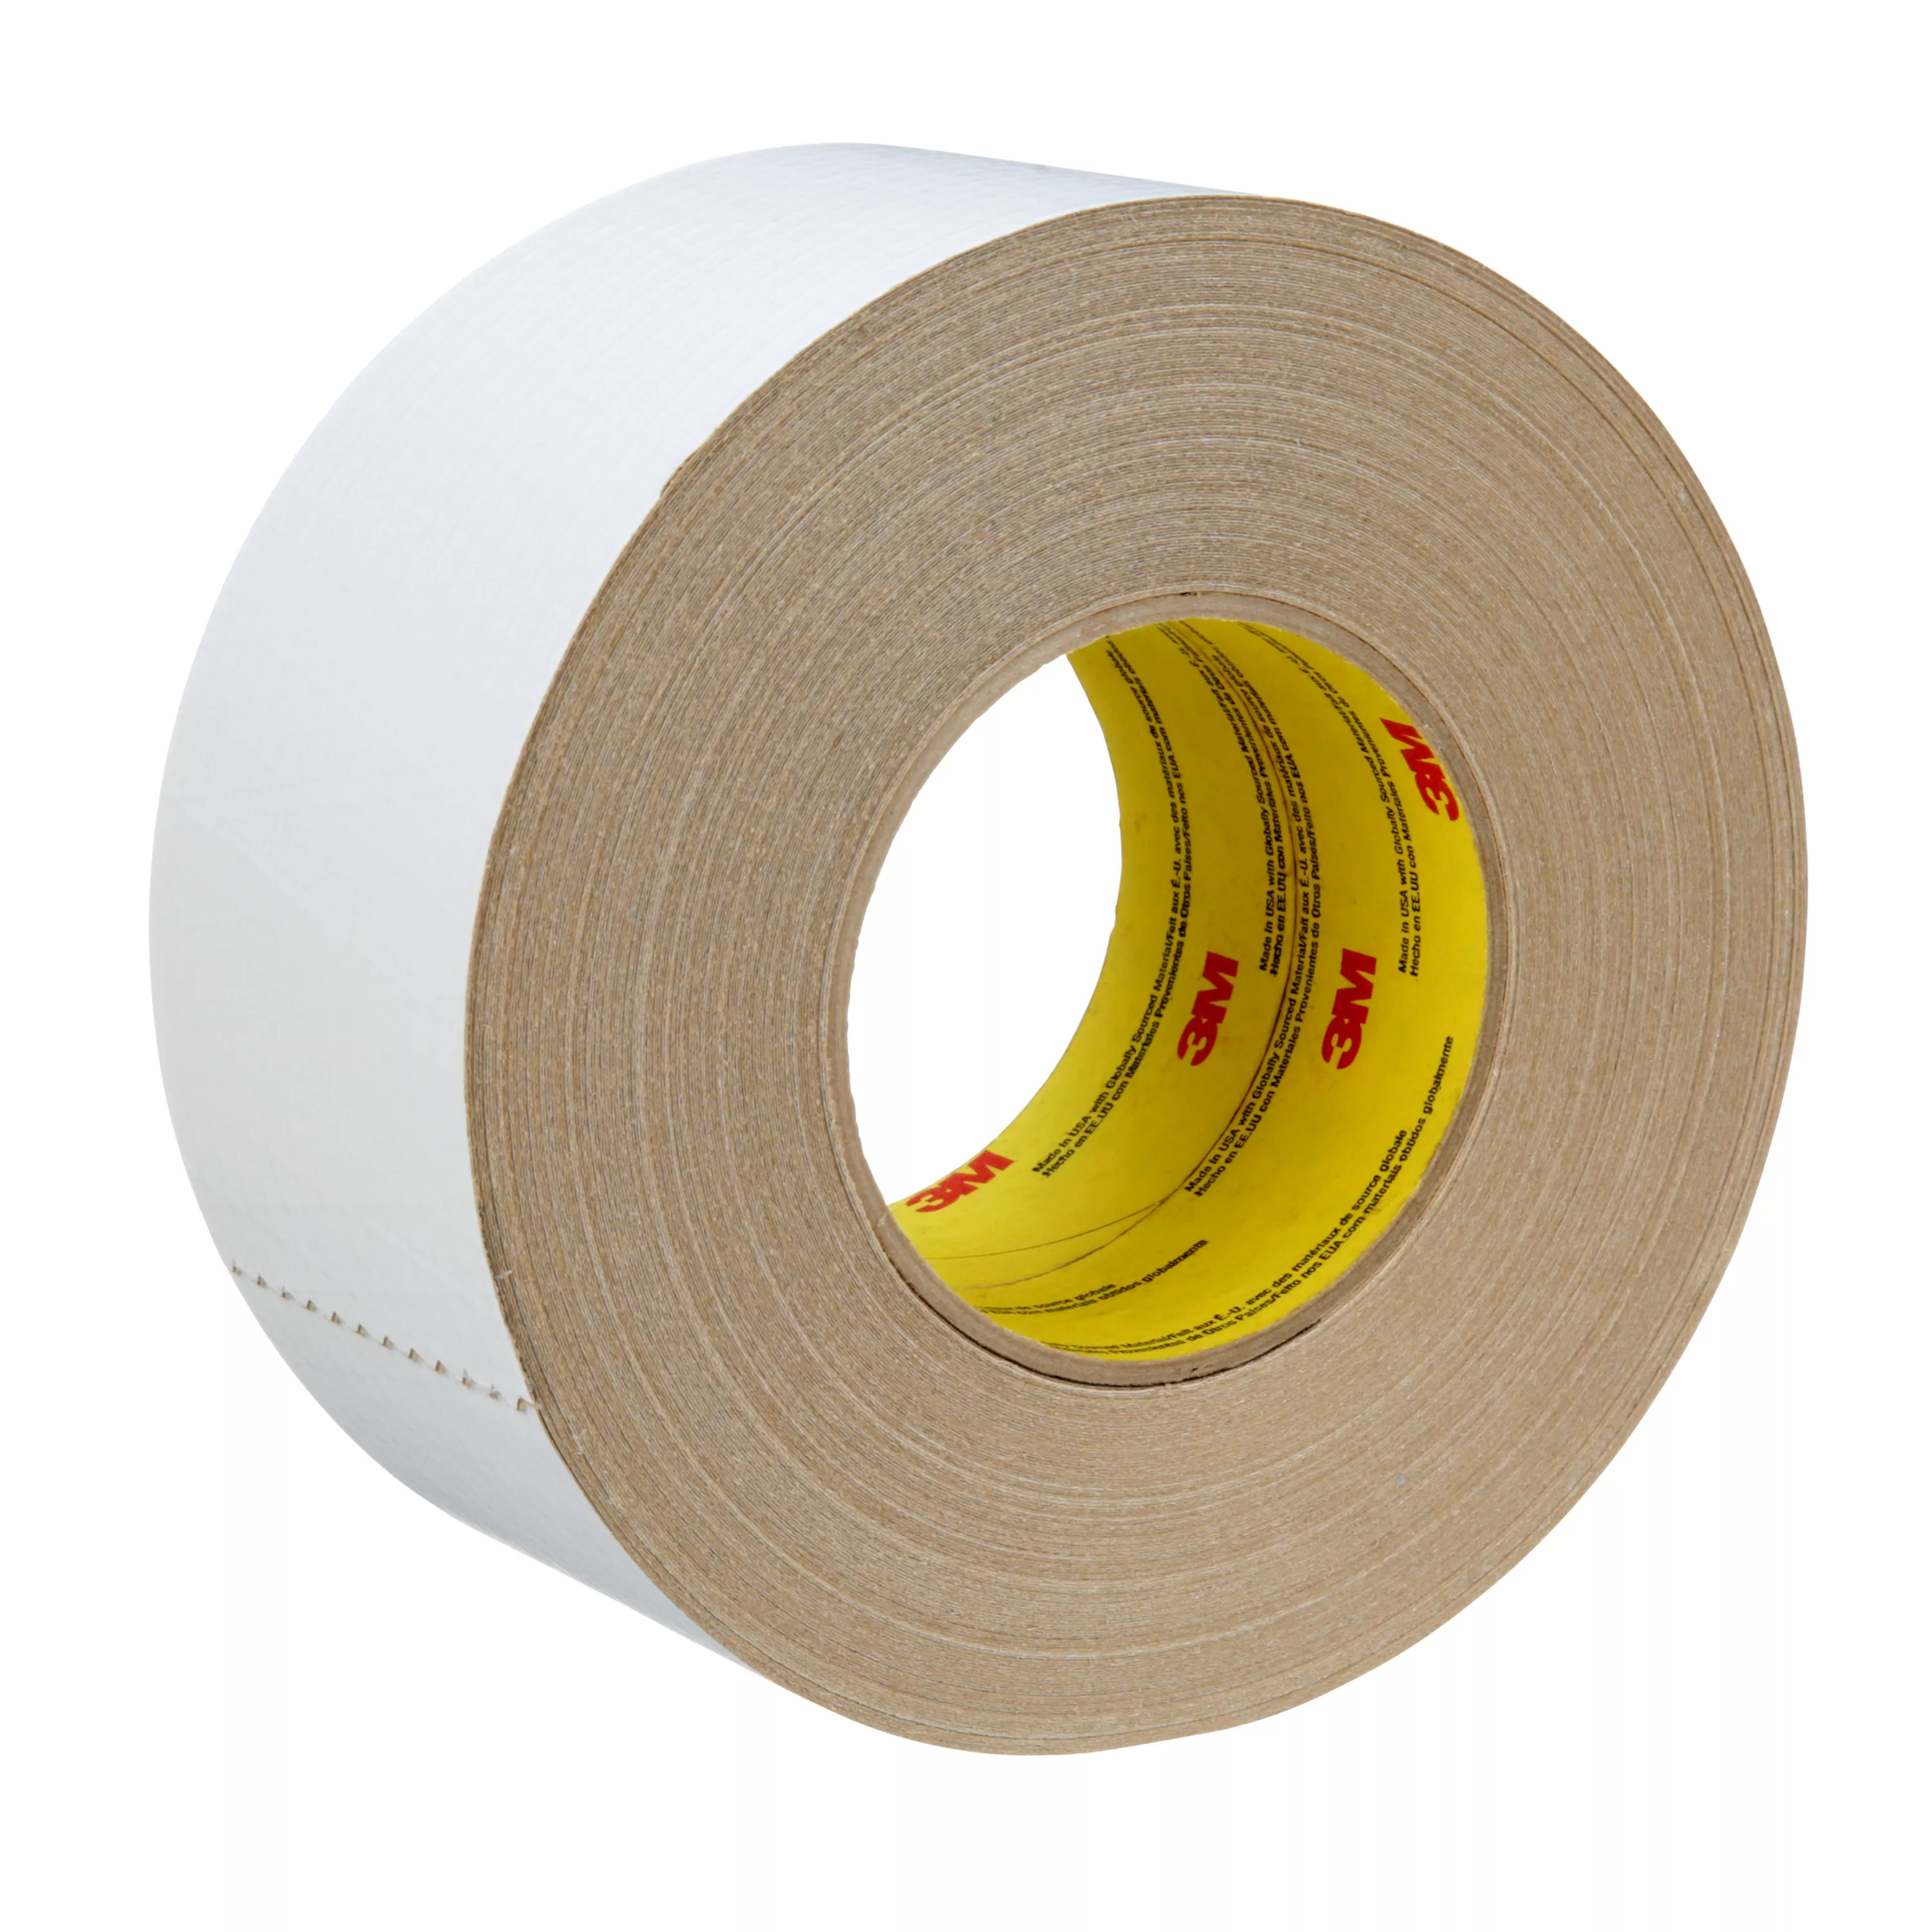 3M™ Venture Tape™ Film Faced ASJ Tape 106FXP, White, 72 mm x 45.7 m, 16
Rolls/Case